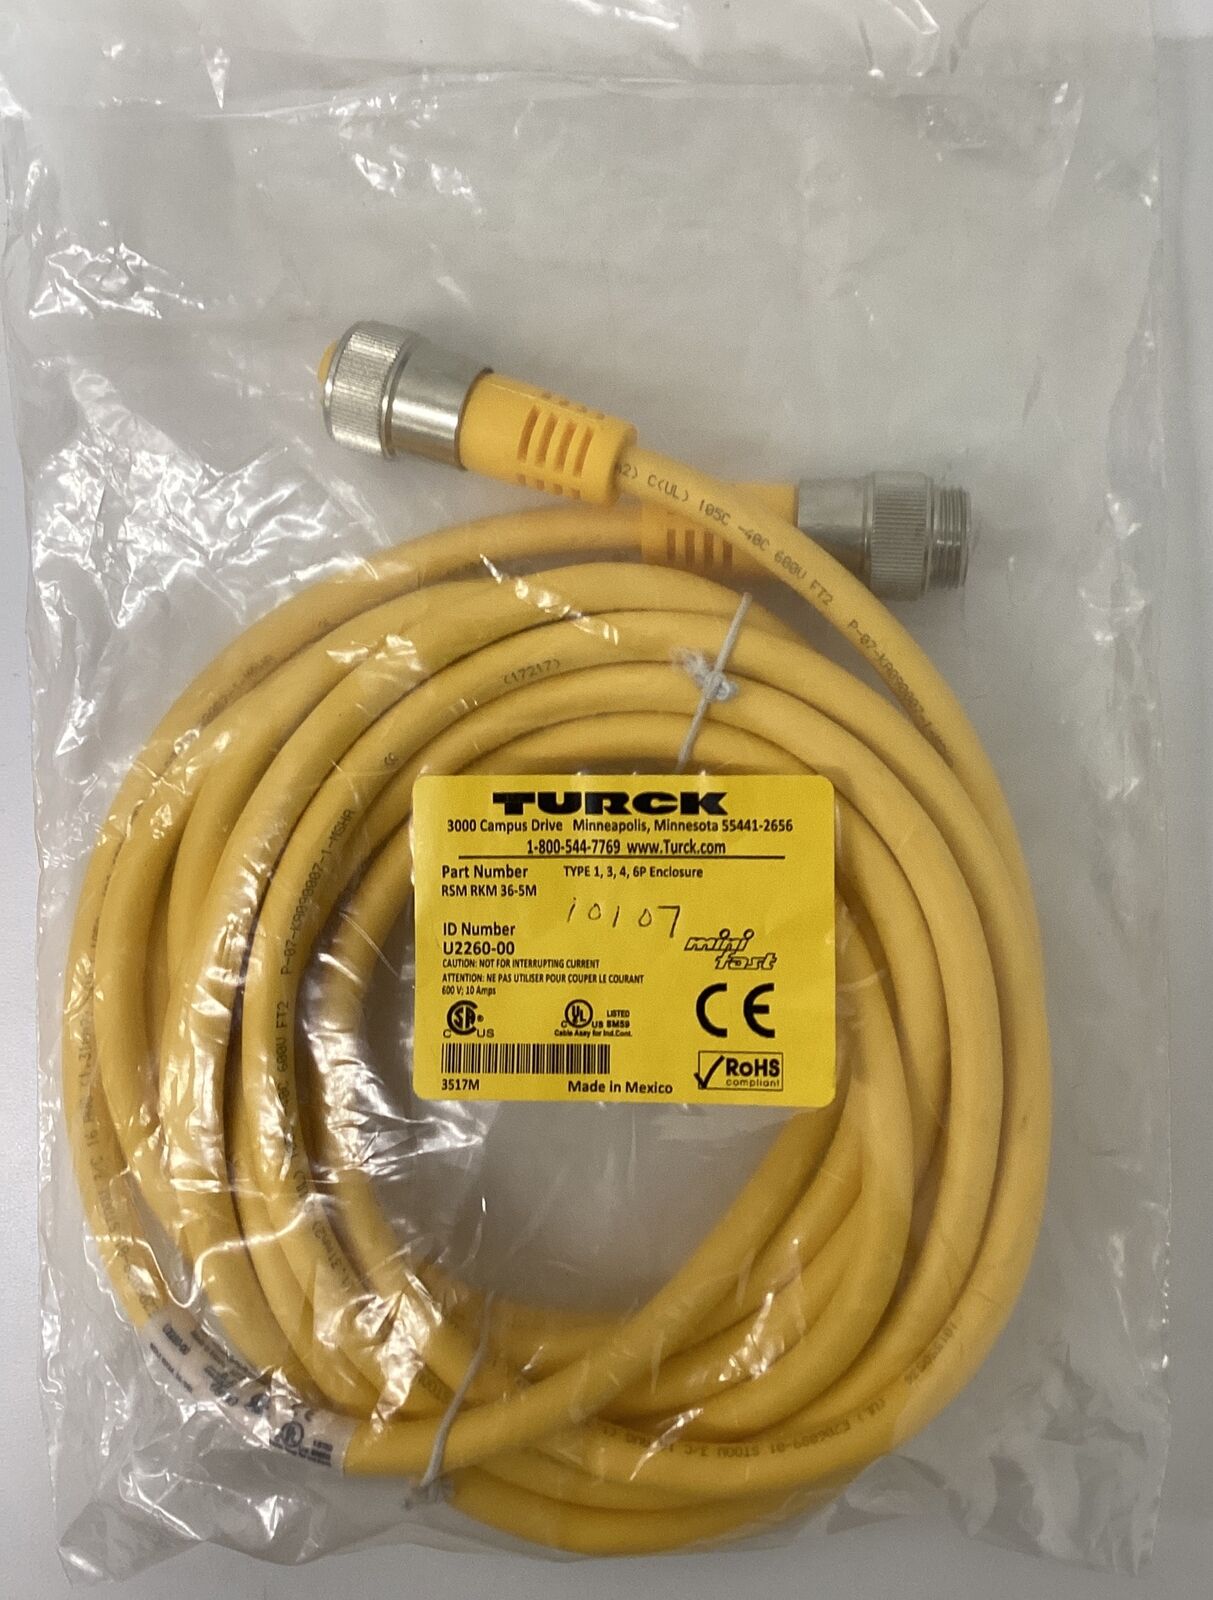 Turck RSM-RKM-36-5M Minifast 3-Pole , 5-meters Male/Female Cable (CBL161) - 0